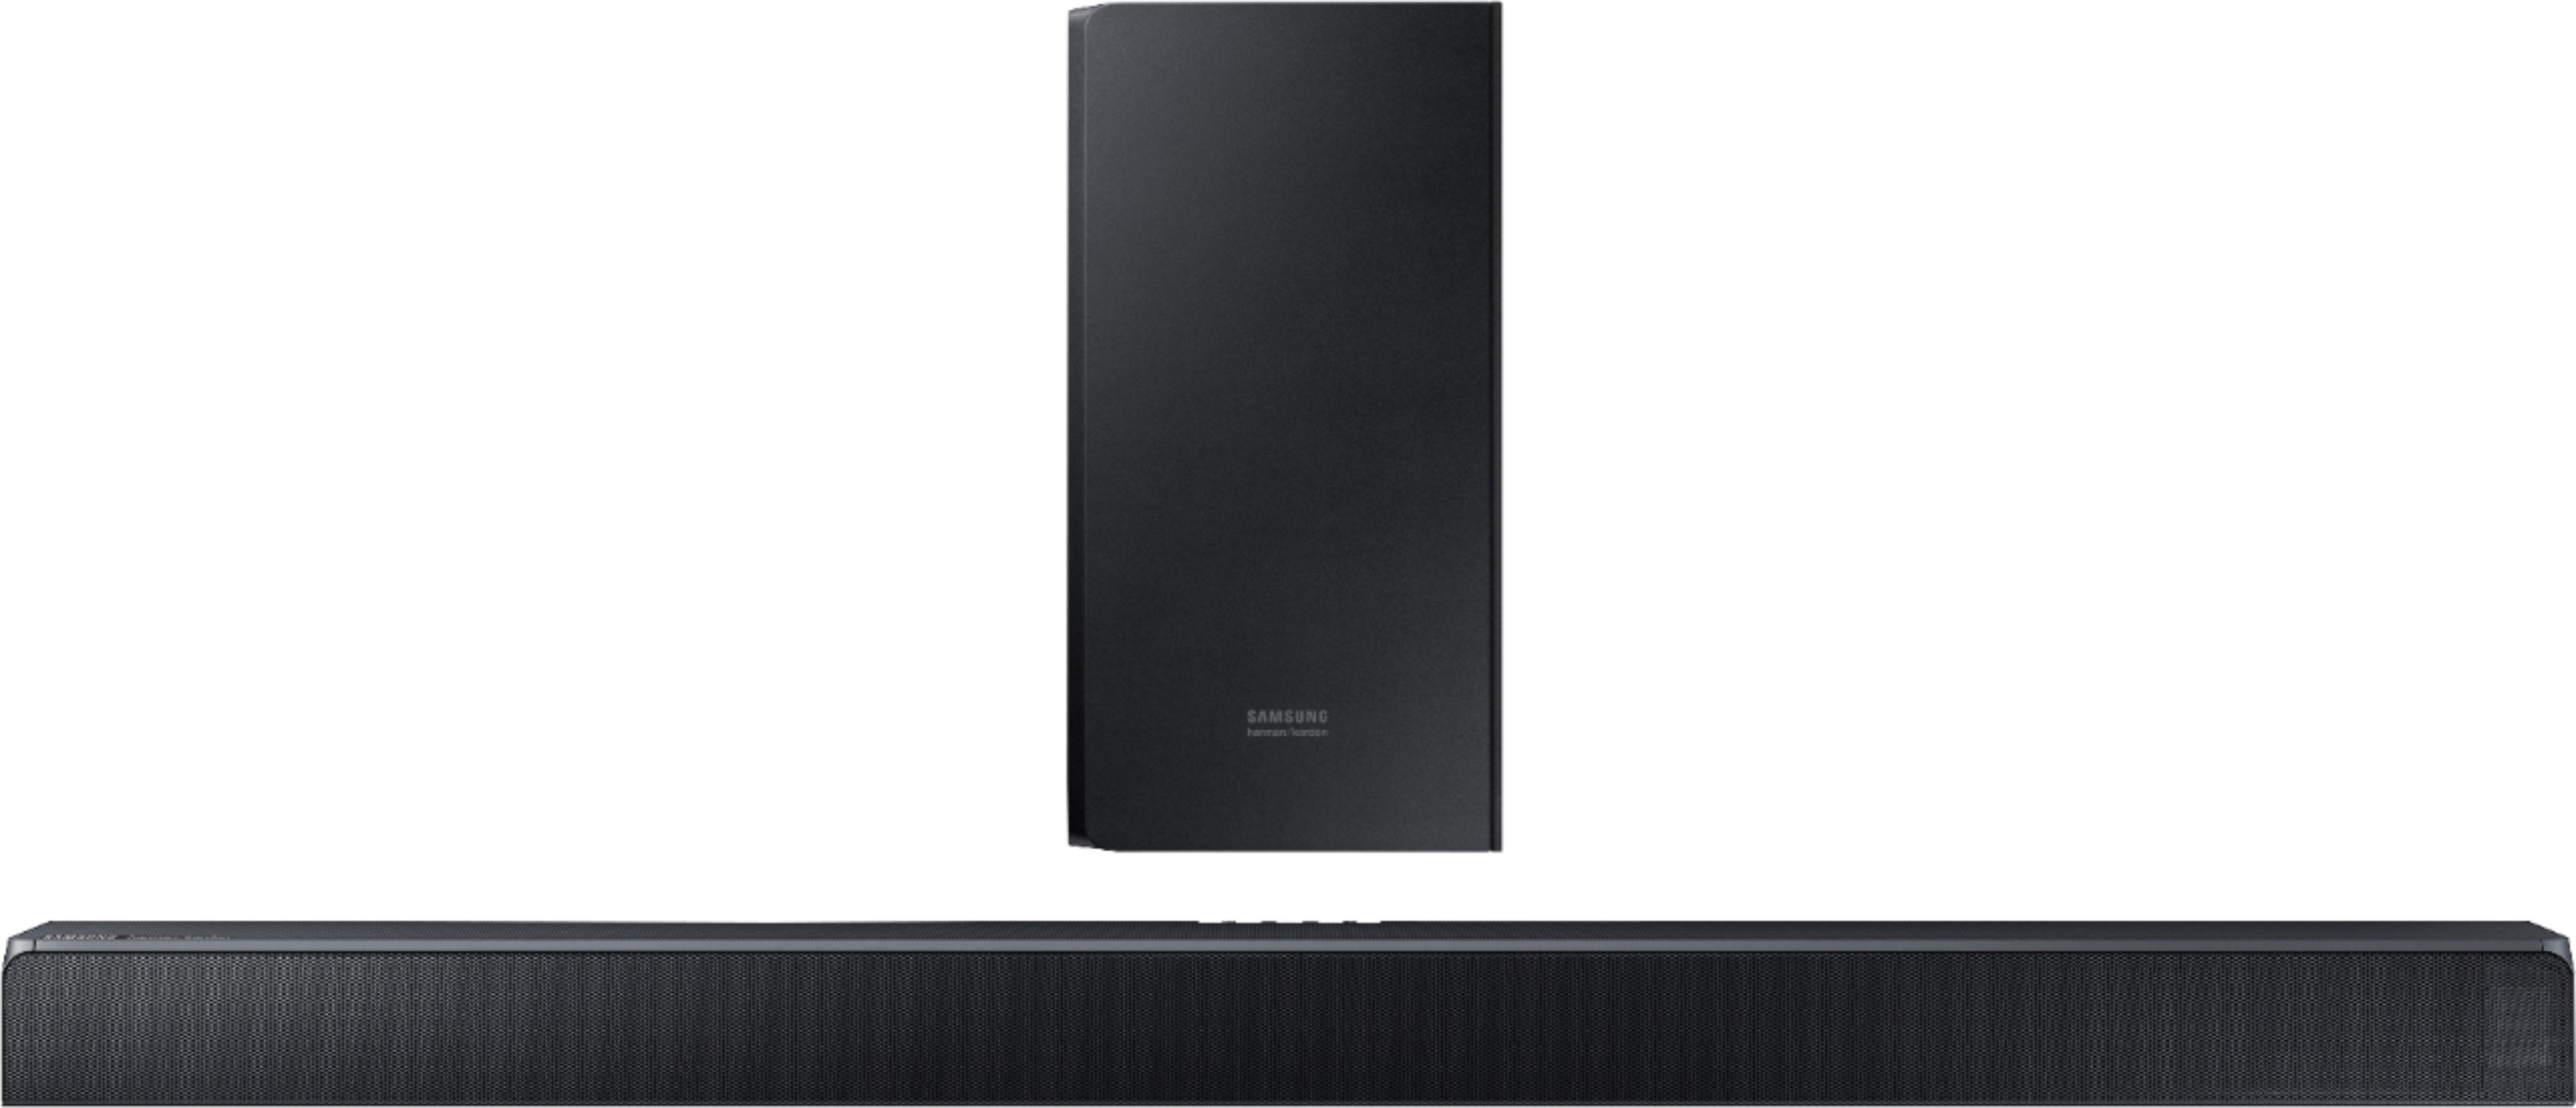 Customer Reviews: Samsung Harman Kardon Soundbar with Dolby Atmos Midnight Black - Best